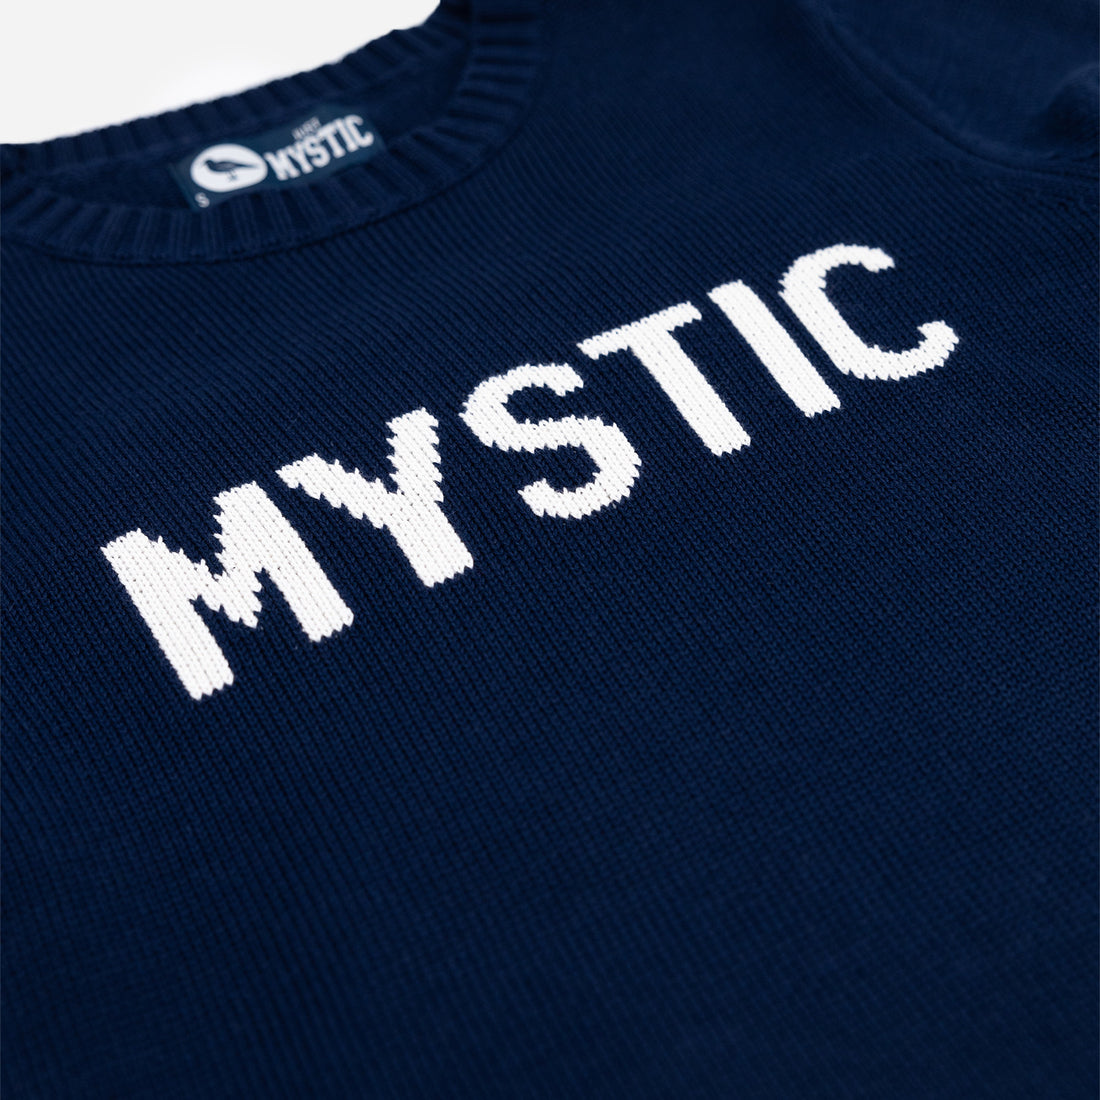 Mystic Women’s Intarsia Knit Sweater in Navy